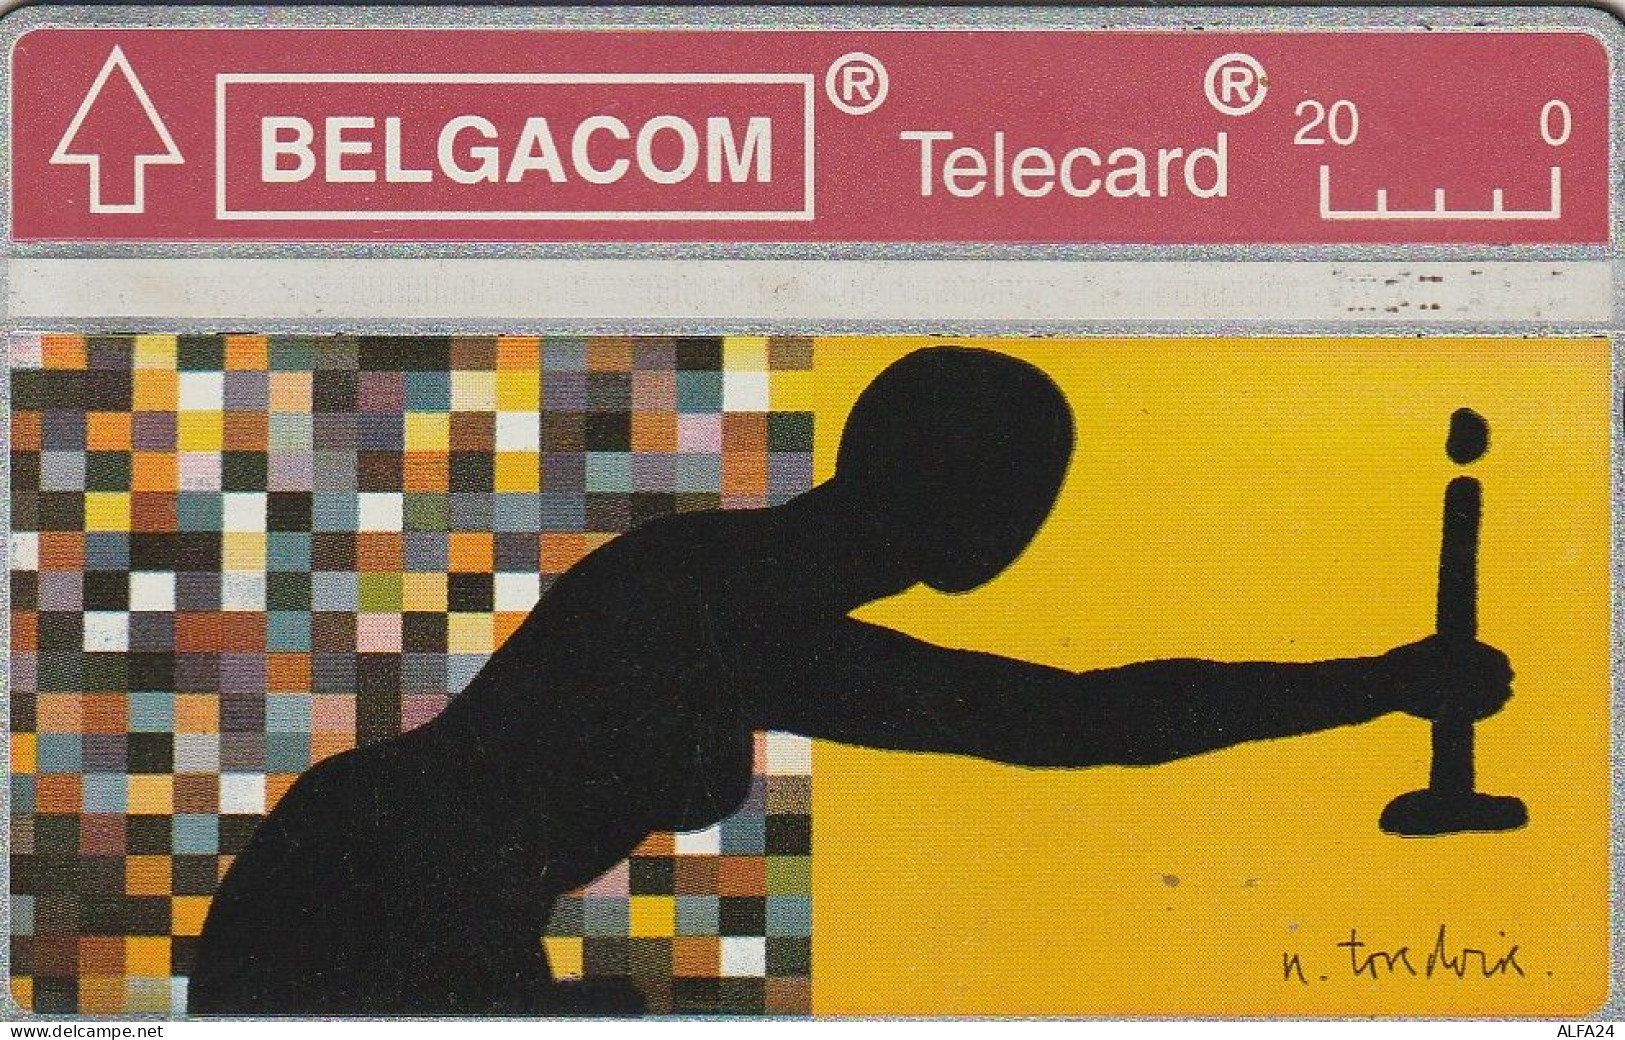 PHONE CARD BELGIO LG (CV6609 - Ohne Chip